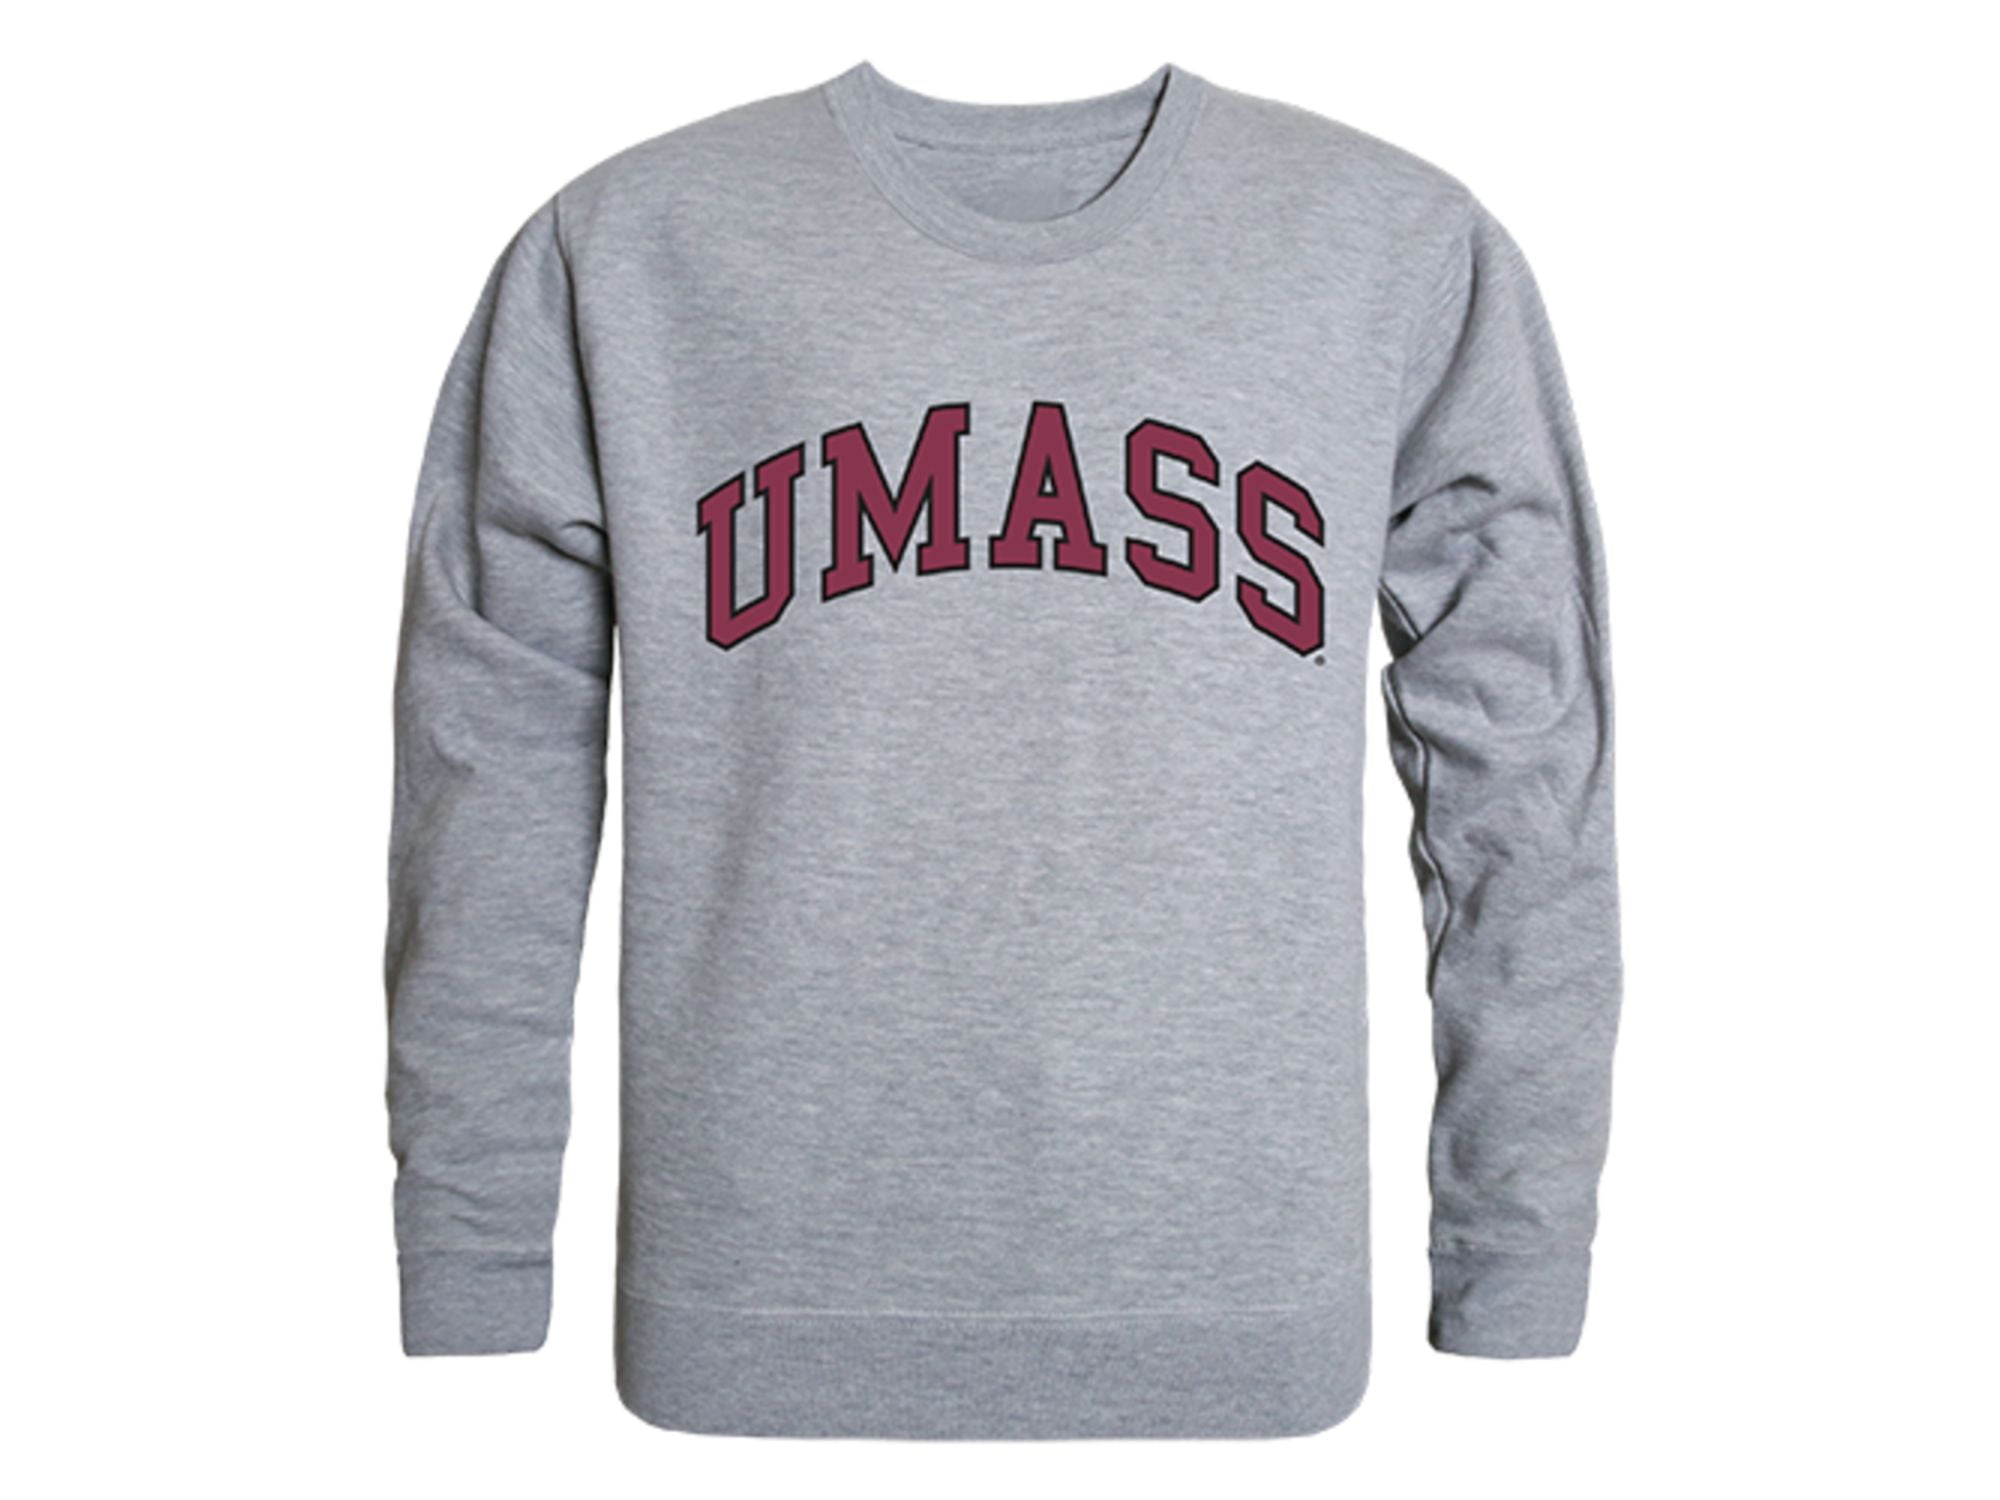 W Republic UMass University of Massachusetts Amherst Campus Crewneck Pullover Sweatshirt Sweater Black